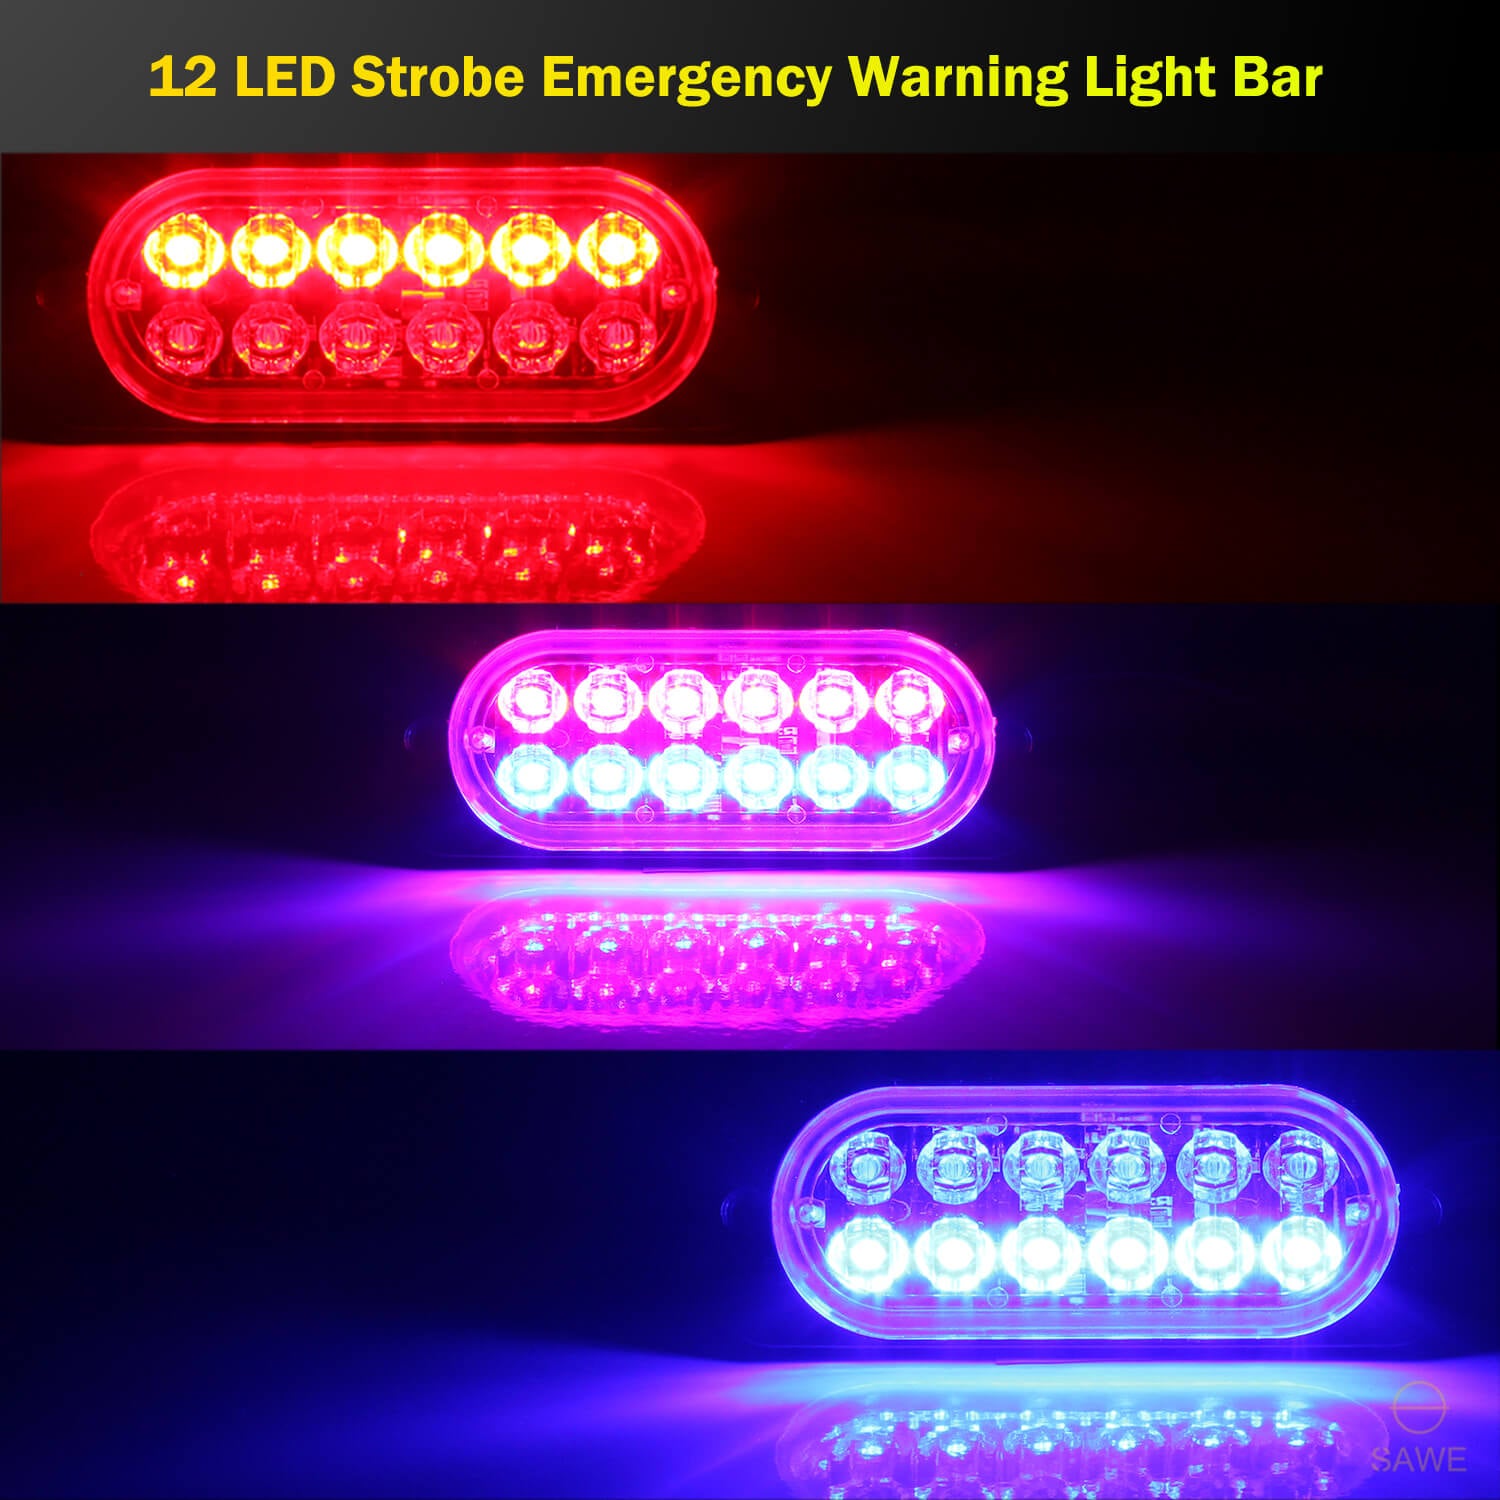 Emergency LED Strobe Lights Bar for Offroad Car Truck Warning Hazard Flash Grille and Surface Mount Light - Red / Blue 12-LED